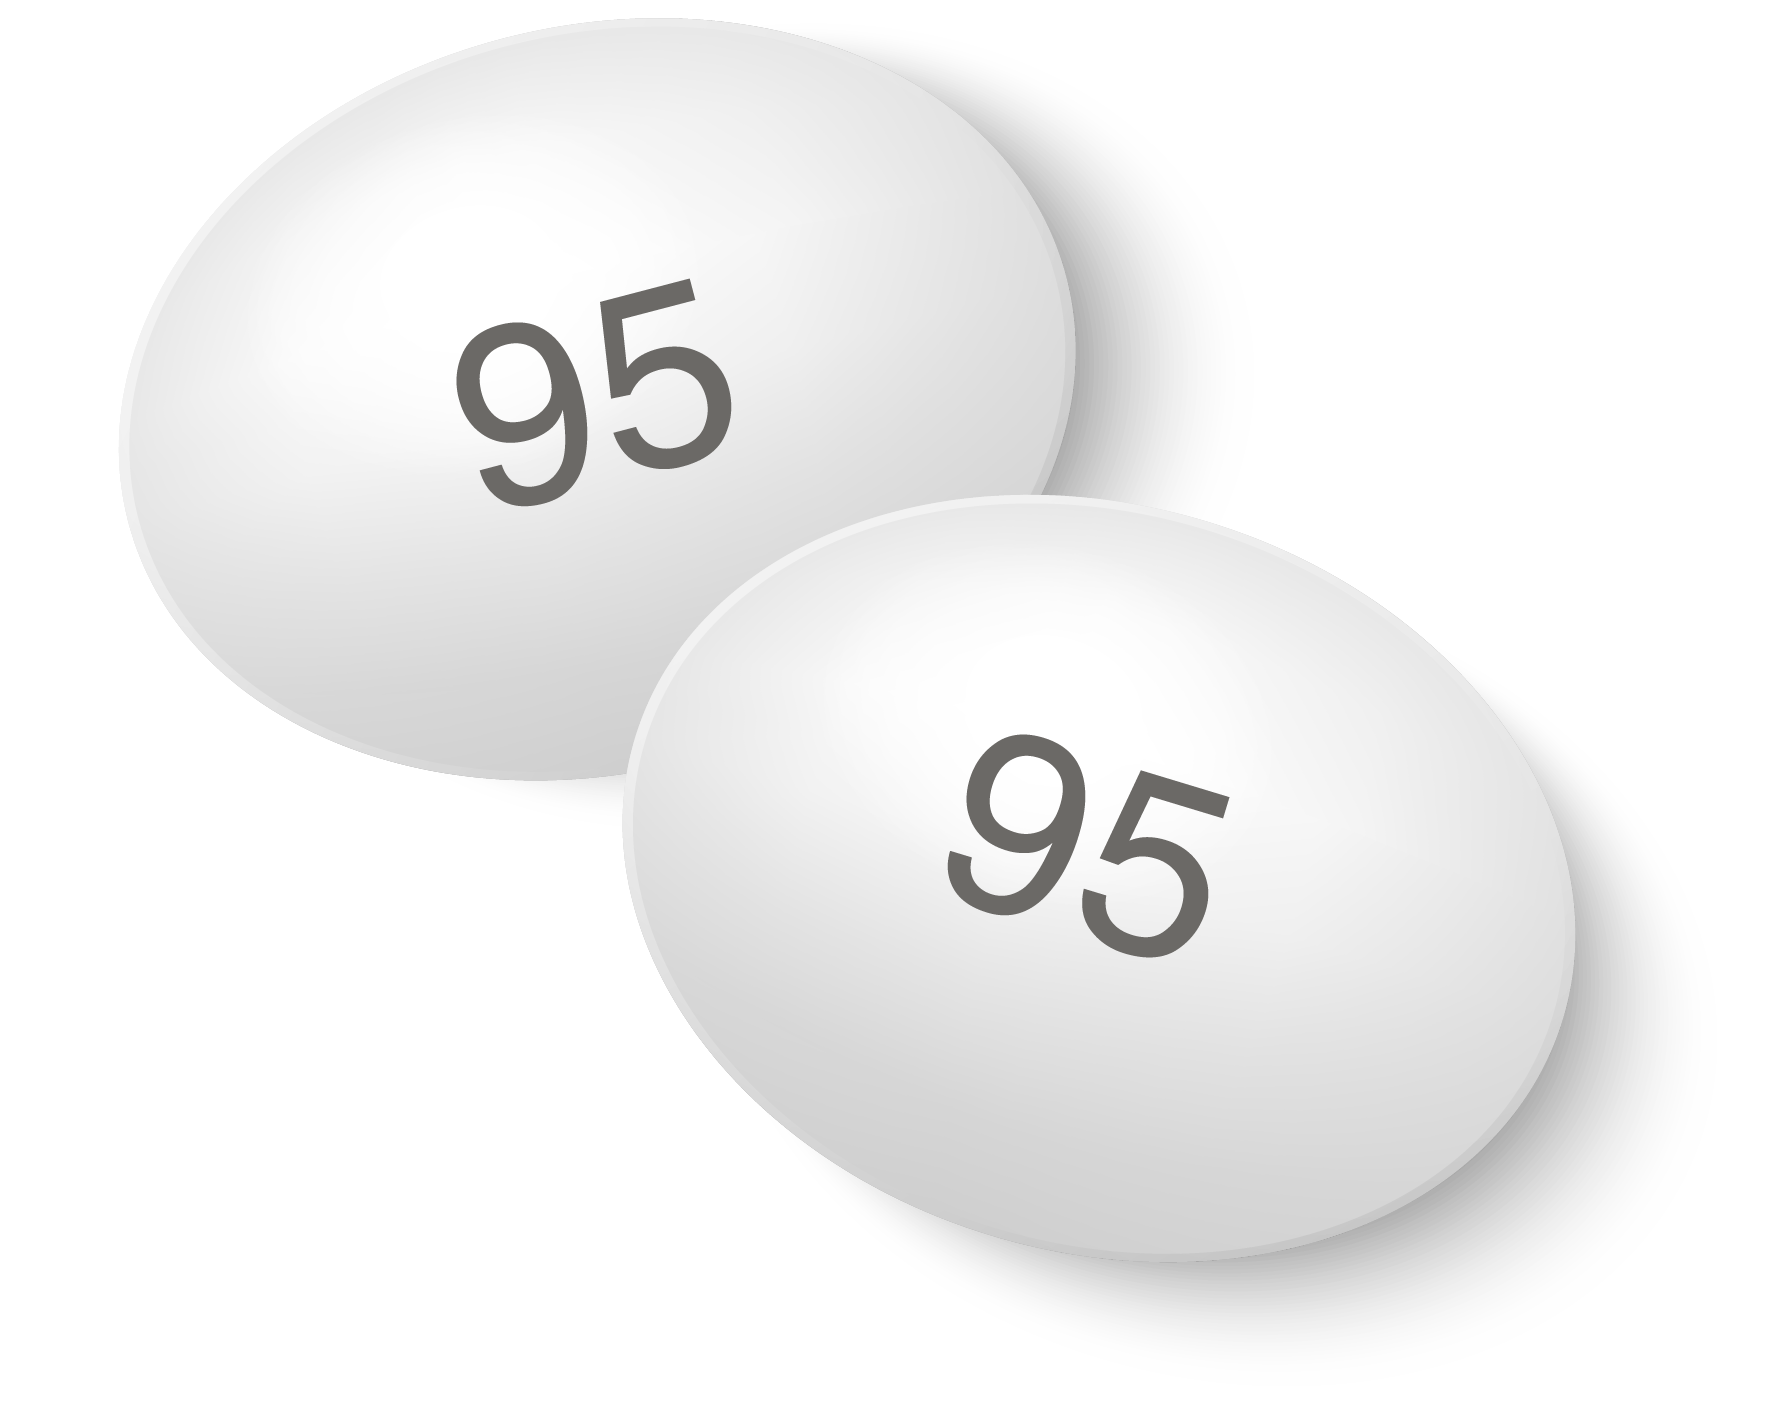 BAFIERTAM® (monomethyl fumarate) 190 mg soft gel capsules taken twice daily.